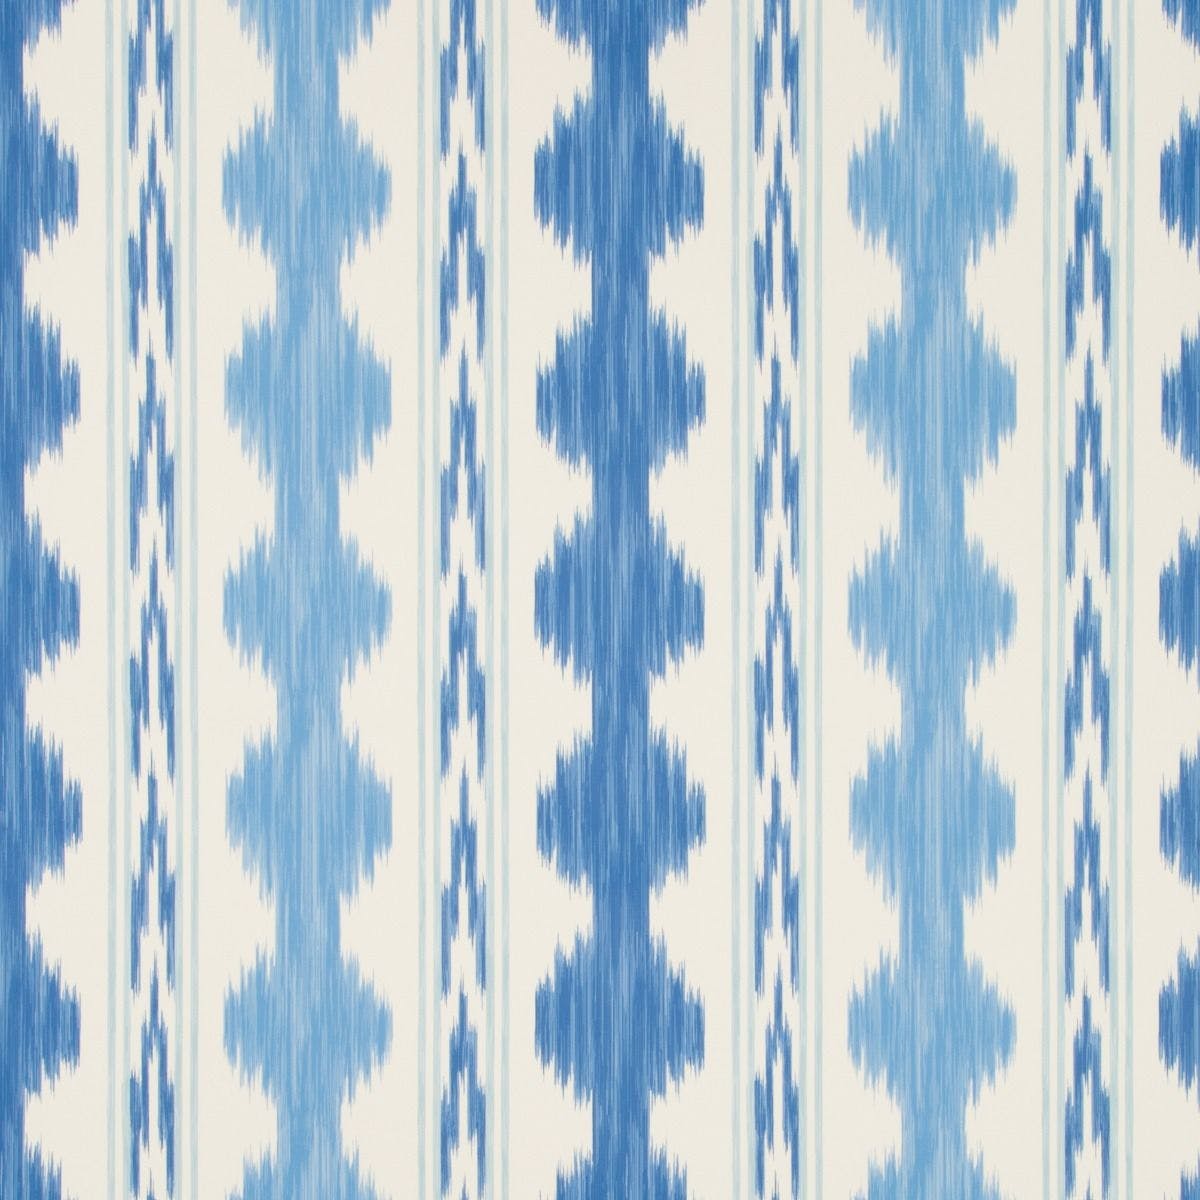 A bold wallpaper in Classic Blue geometric pattern